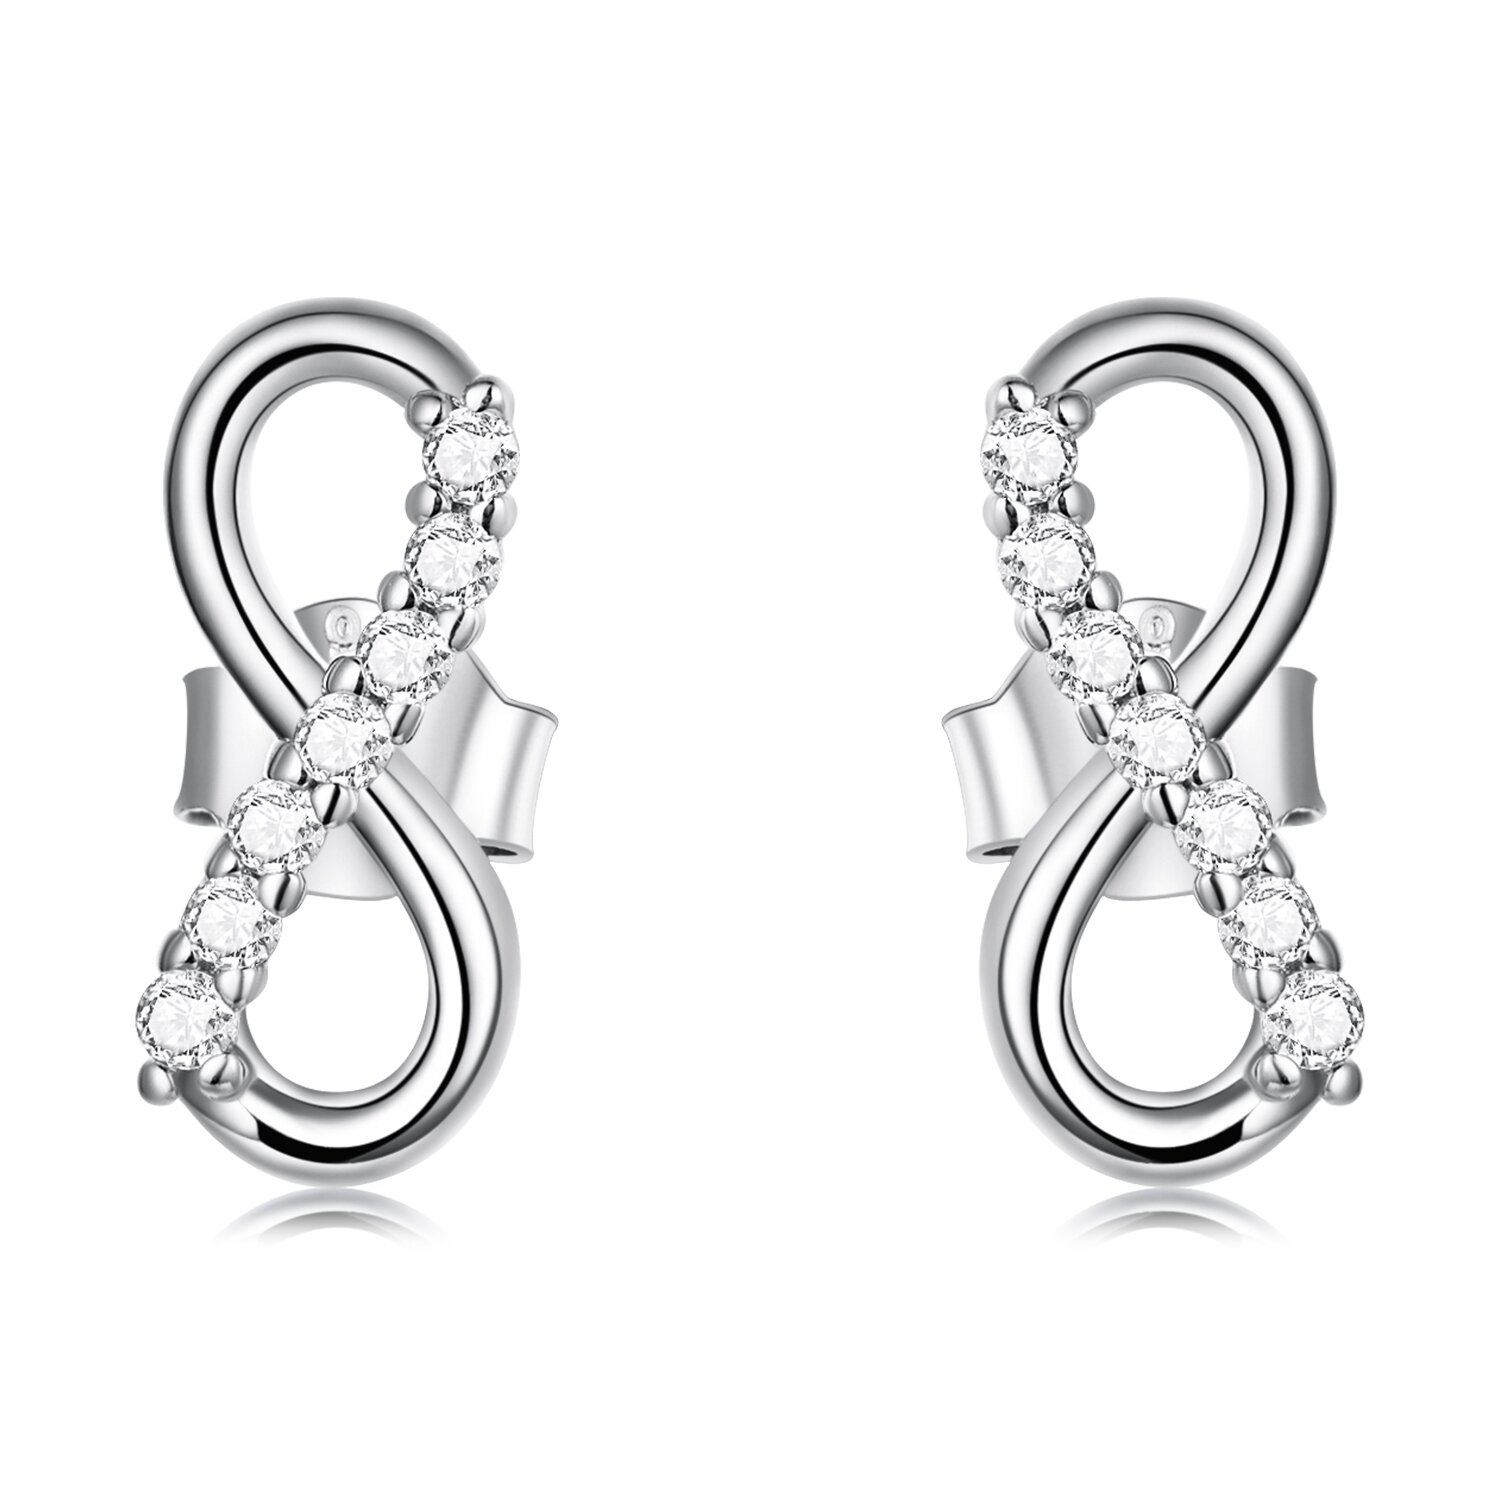 Cercei din argint Beautiful Infinite Simple Earrings la pret fara cncurenta